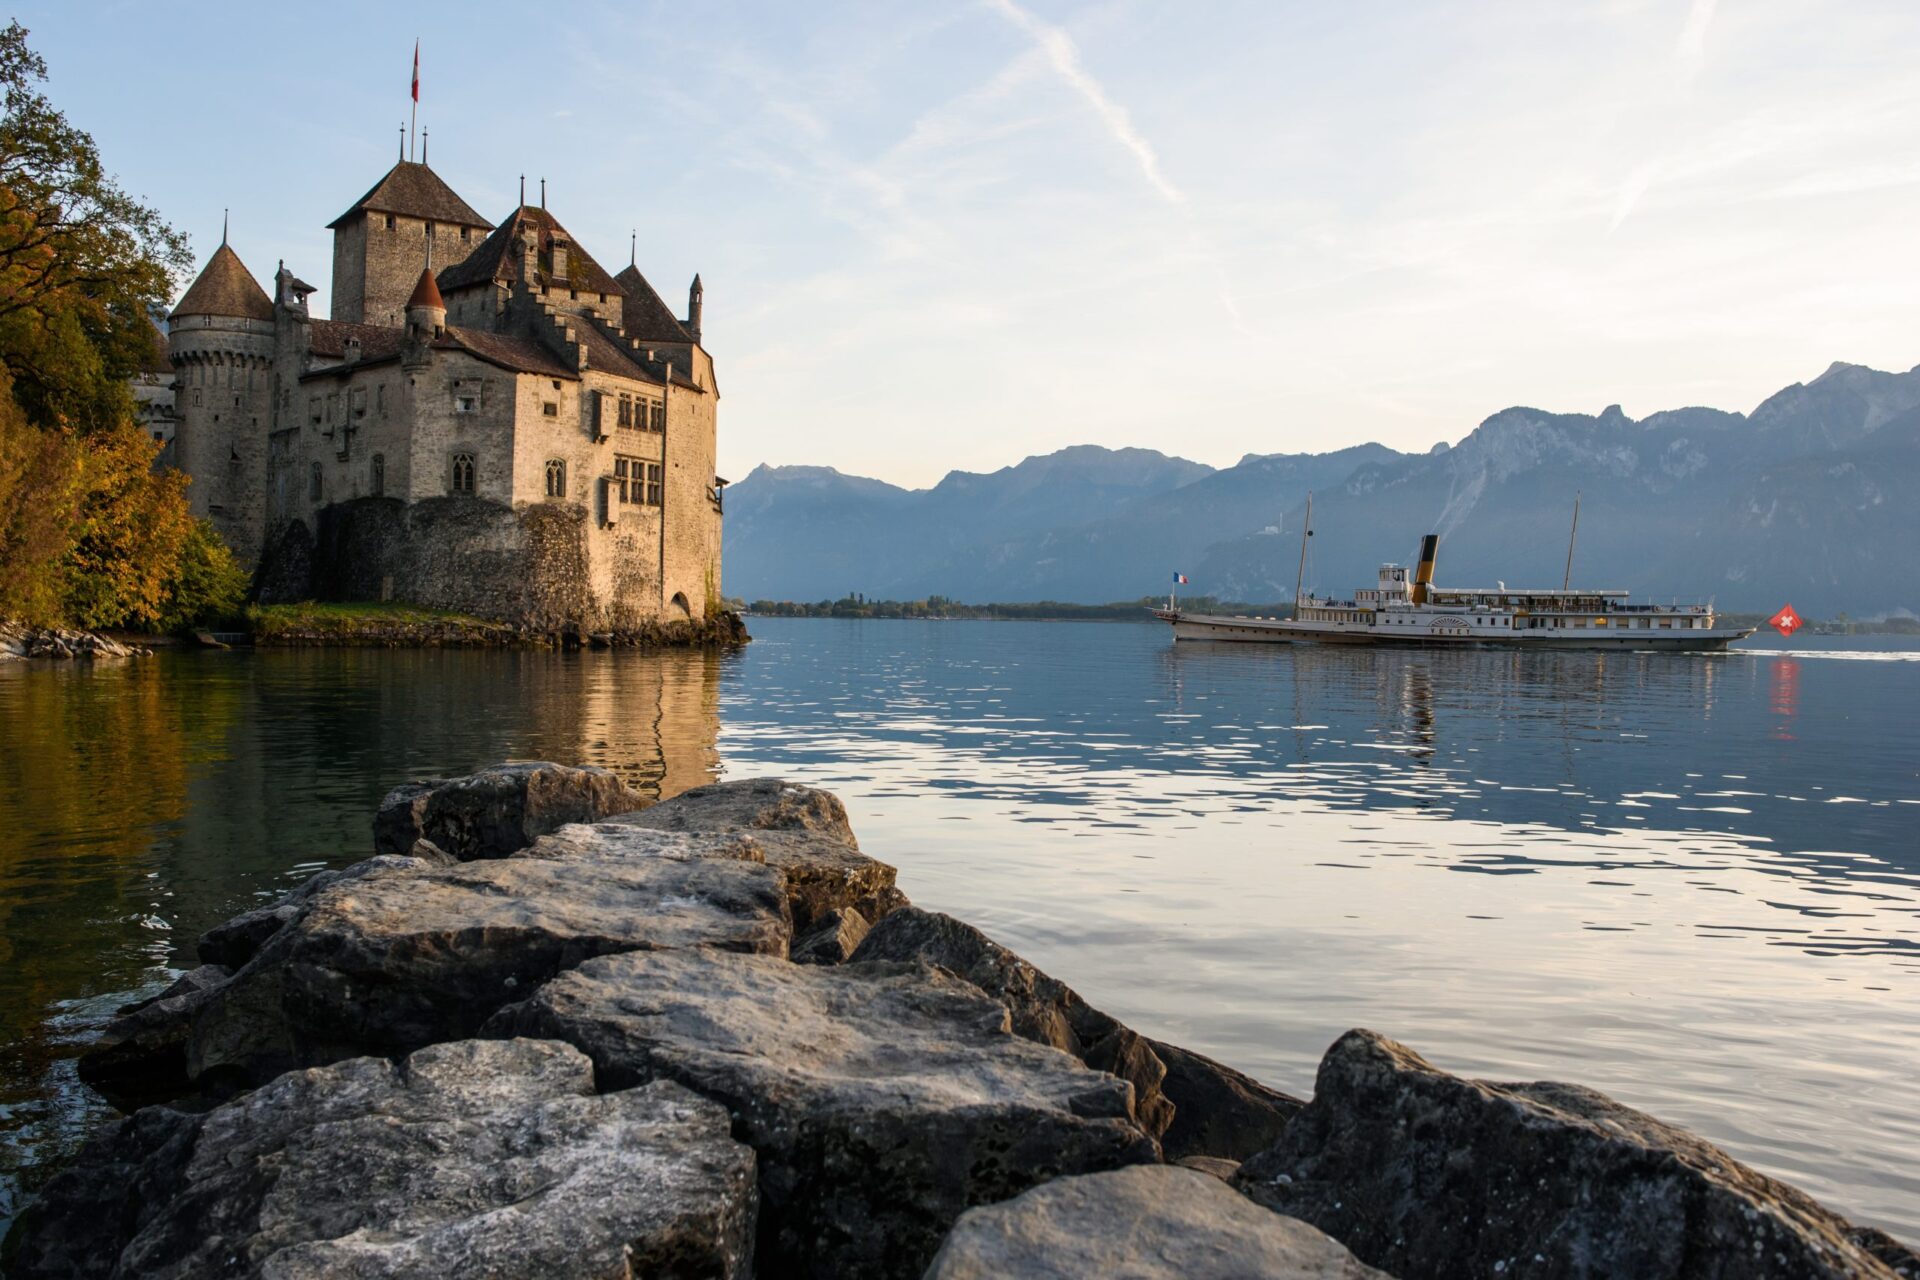 Historic monument Chillon Castle on Lake Geneva